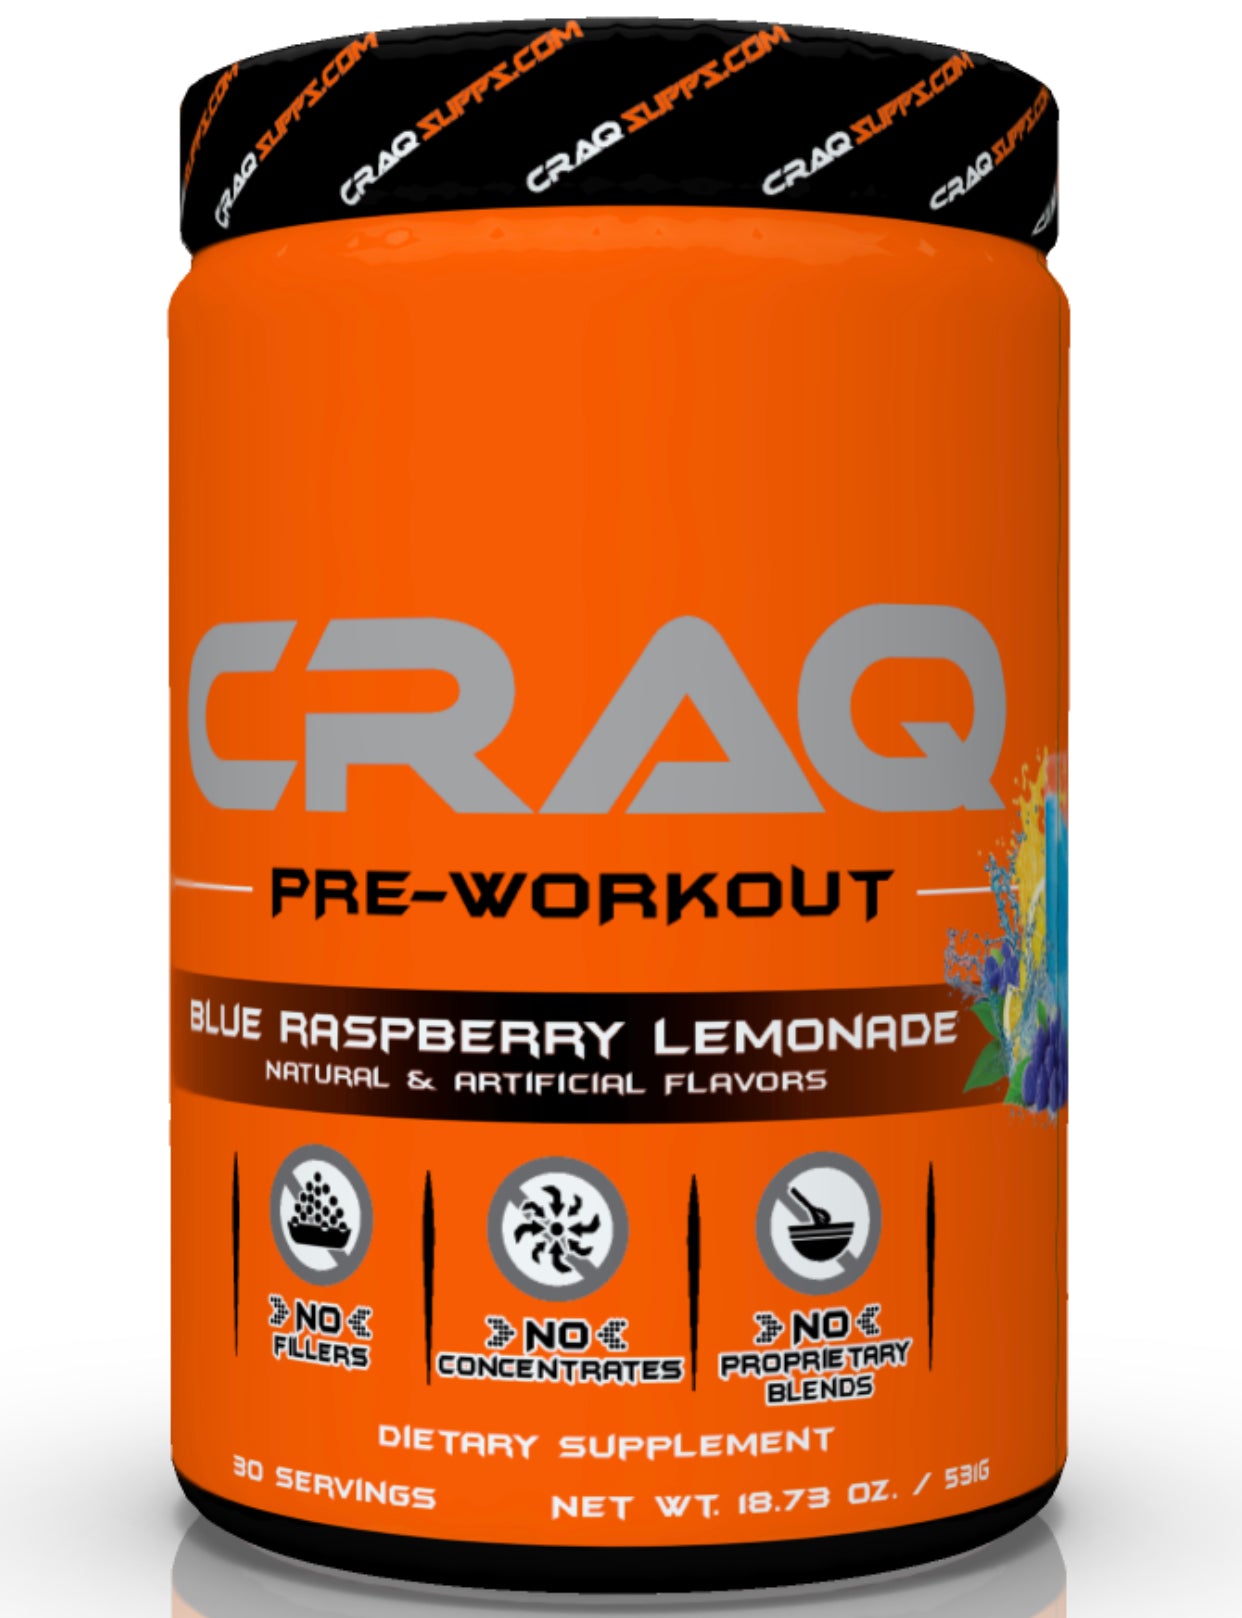 CRAQ Original Pre-Workout